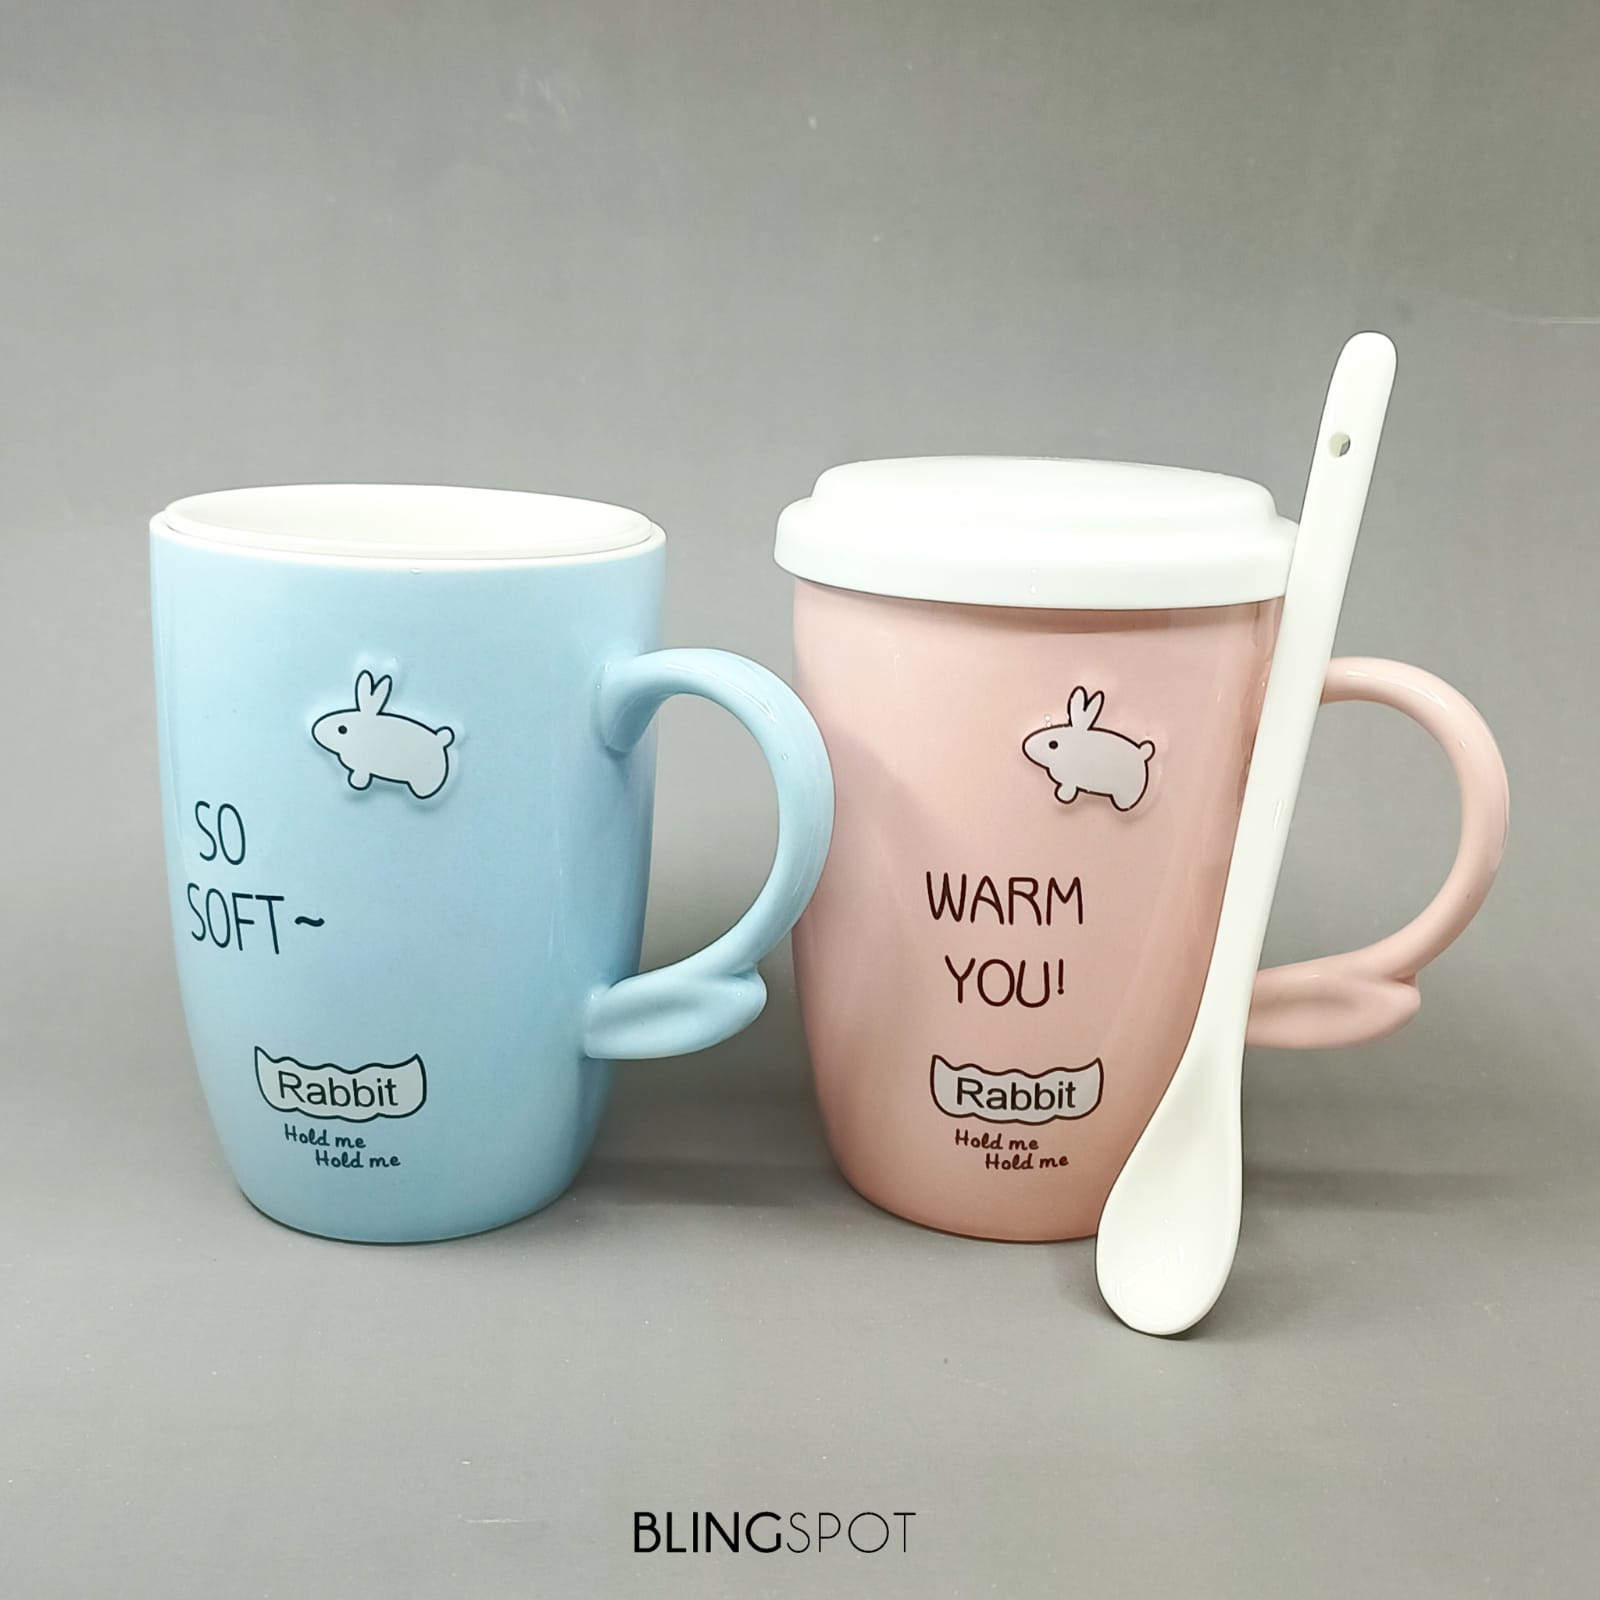 So Soft & Warm You Rabbit - Ceramic Mug